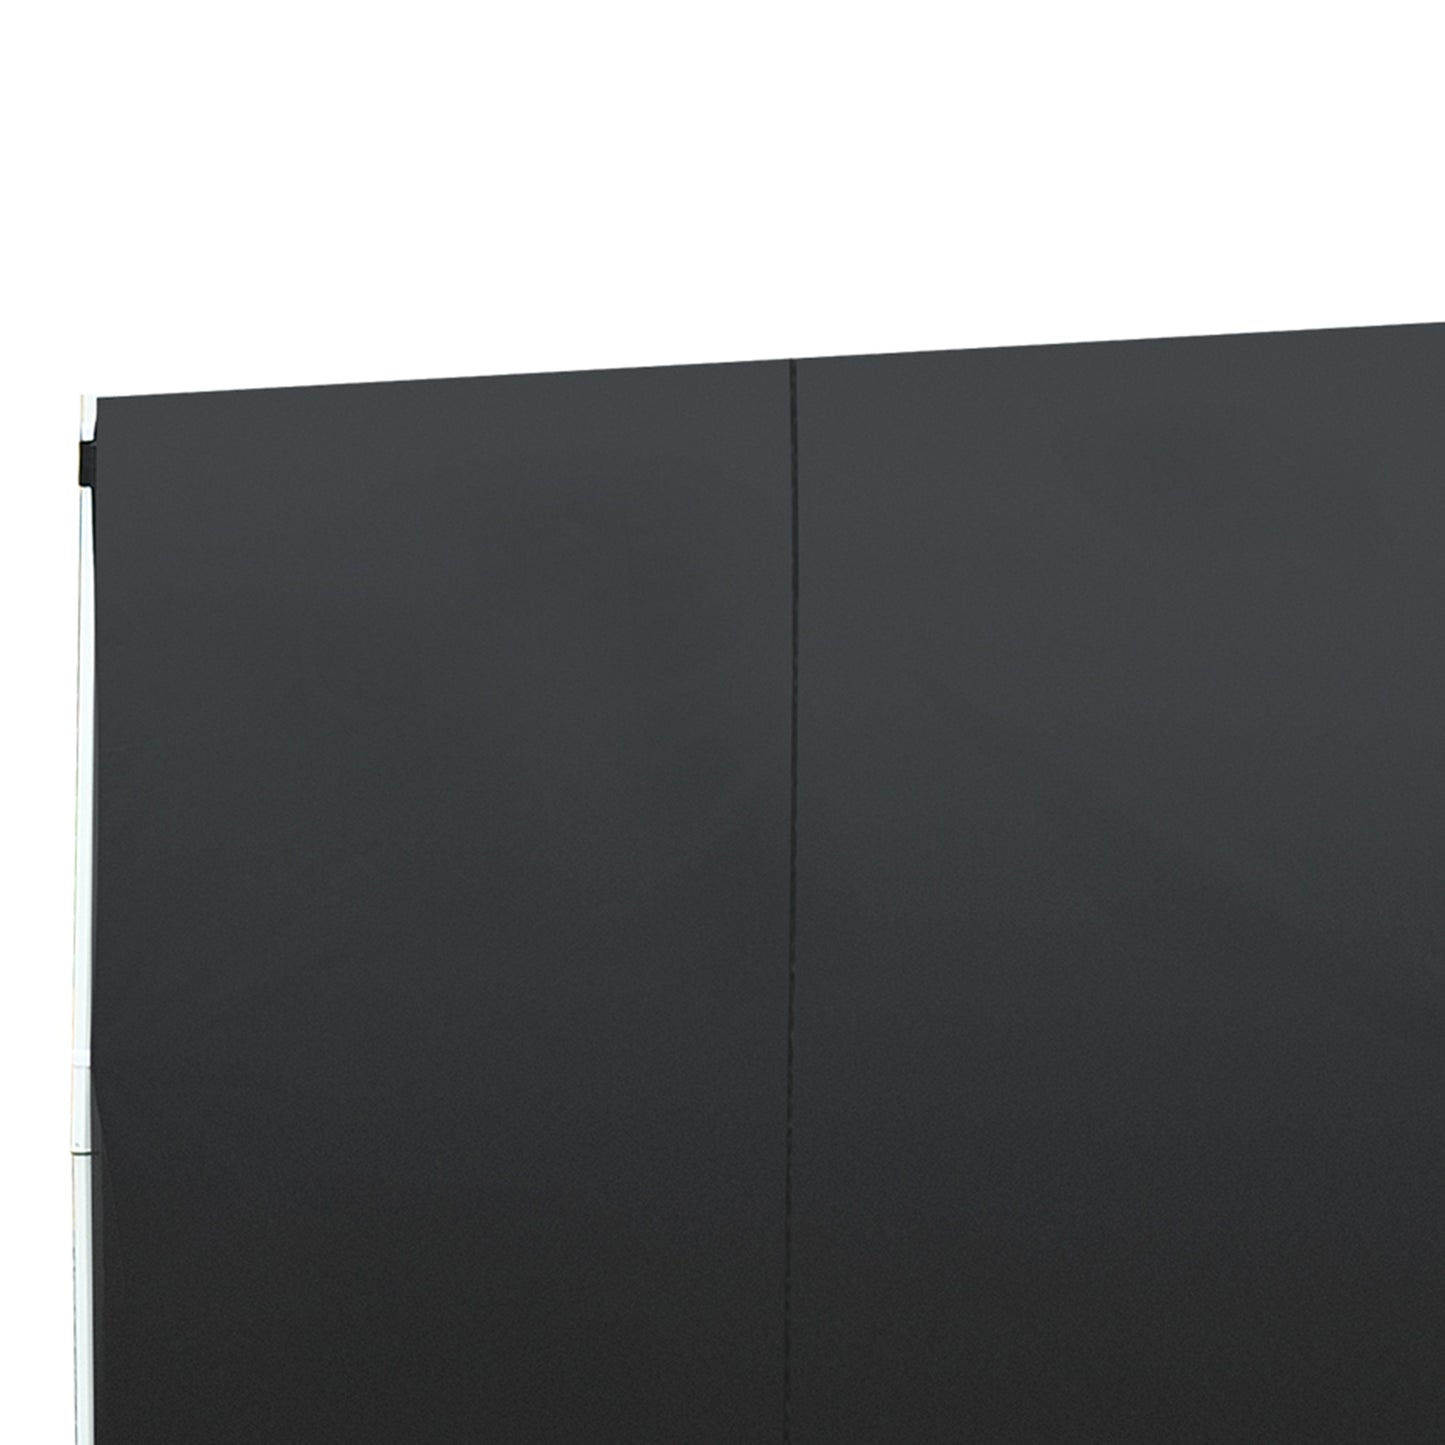 Outsunny 3m Gazebo Exchangeable Side Panels Wall-Black